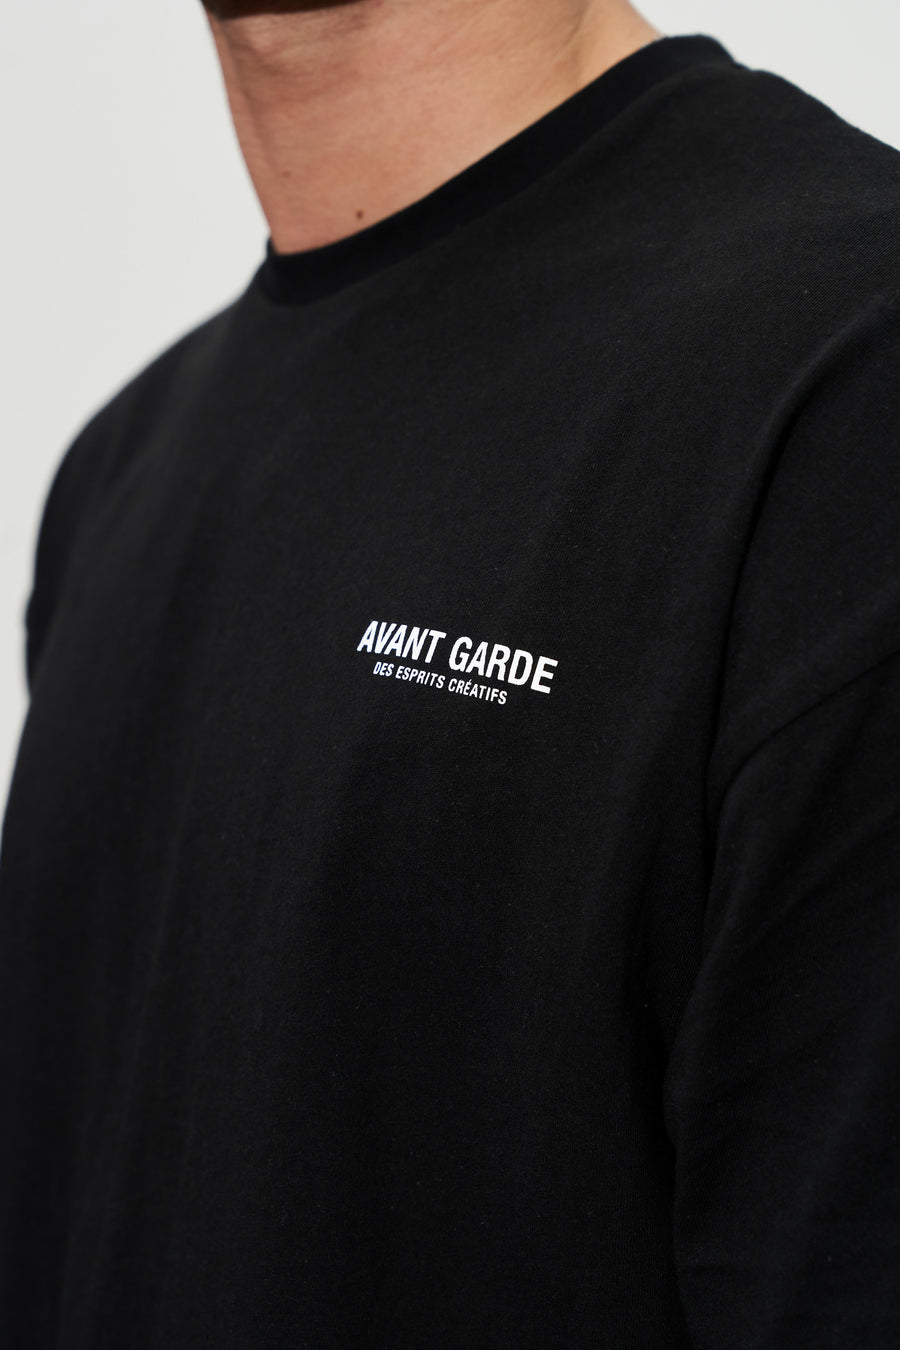 Small brand detail of mens black t-shirt